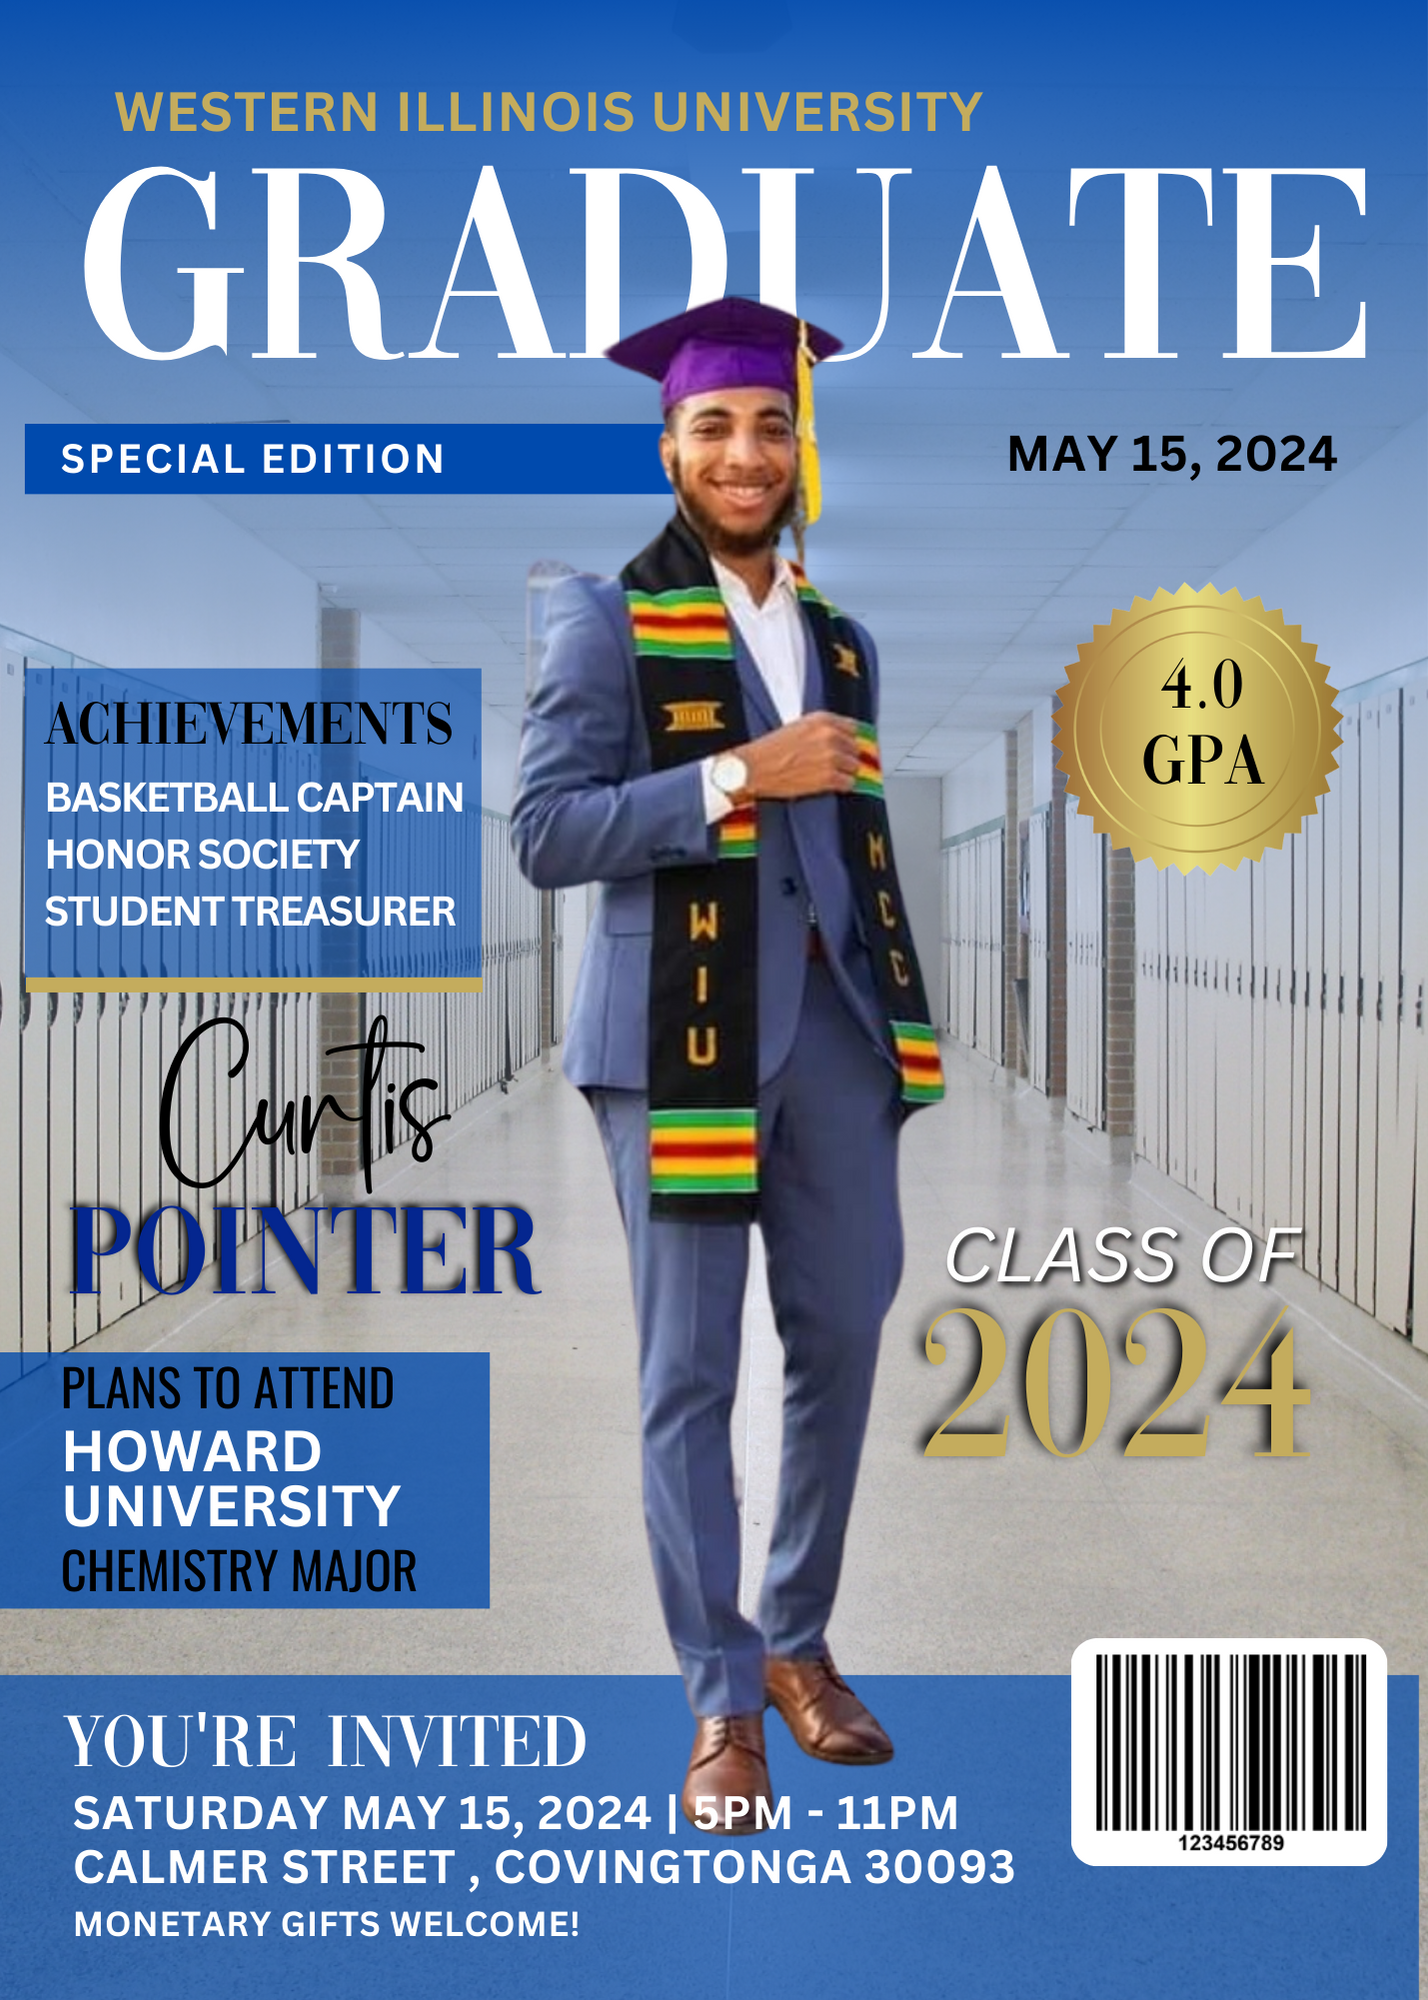 Digital Magazine Cover